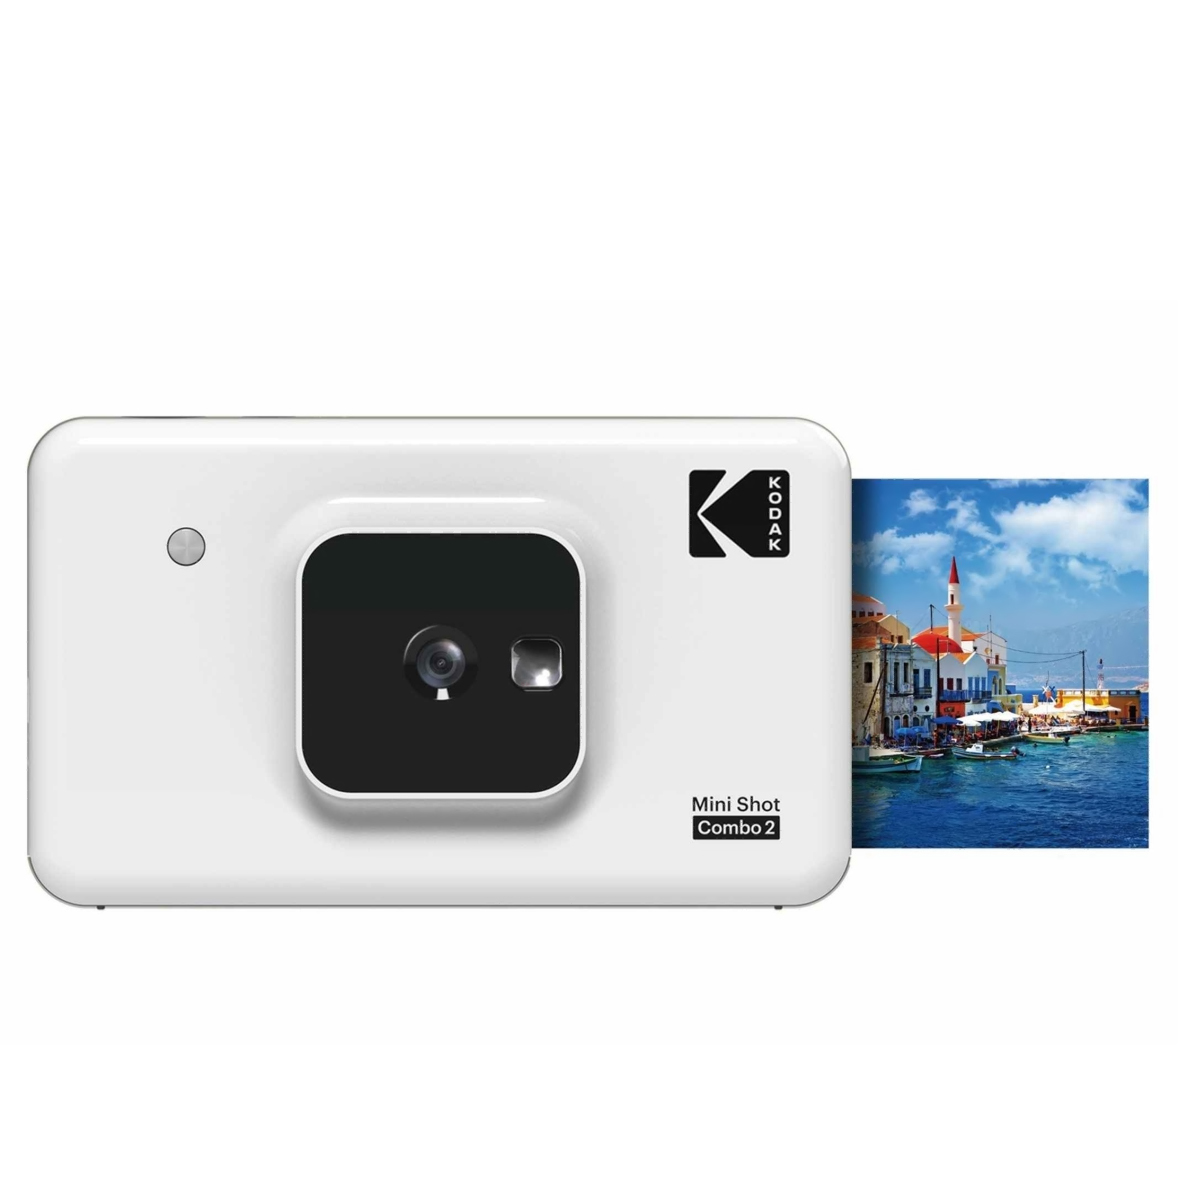 Fotocamera a stampa istantanea Kodak Mini Shot Combo 2 white 53,4 x 86,5 mm CMOS Bianco [5525020]